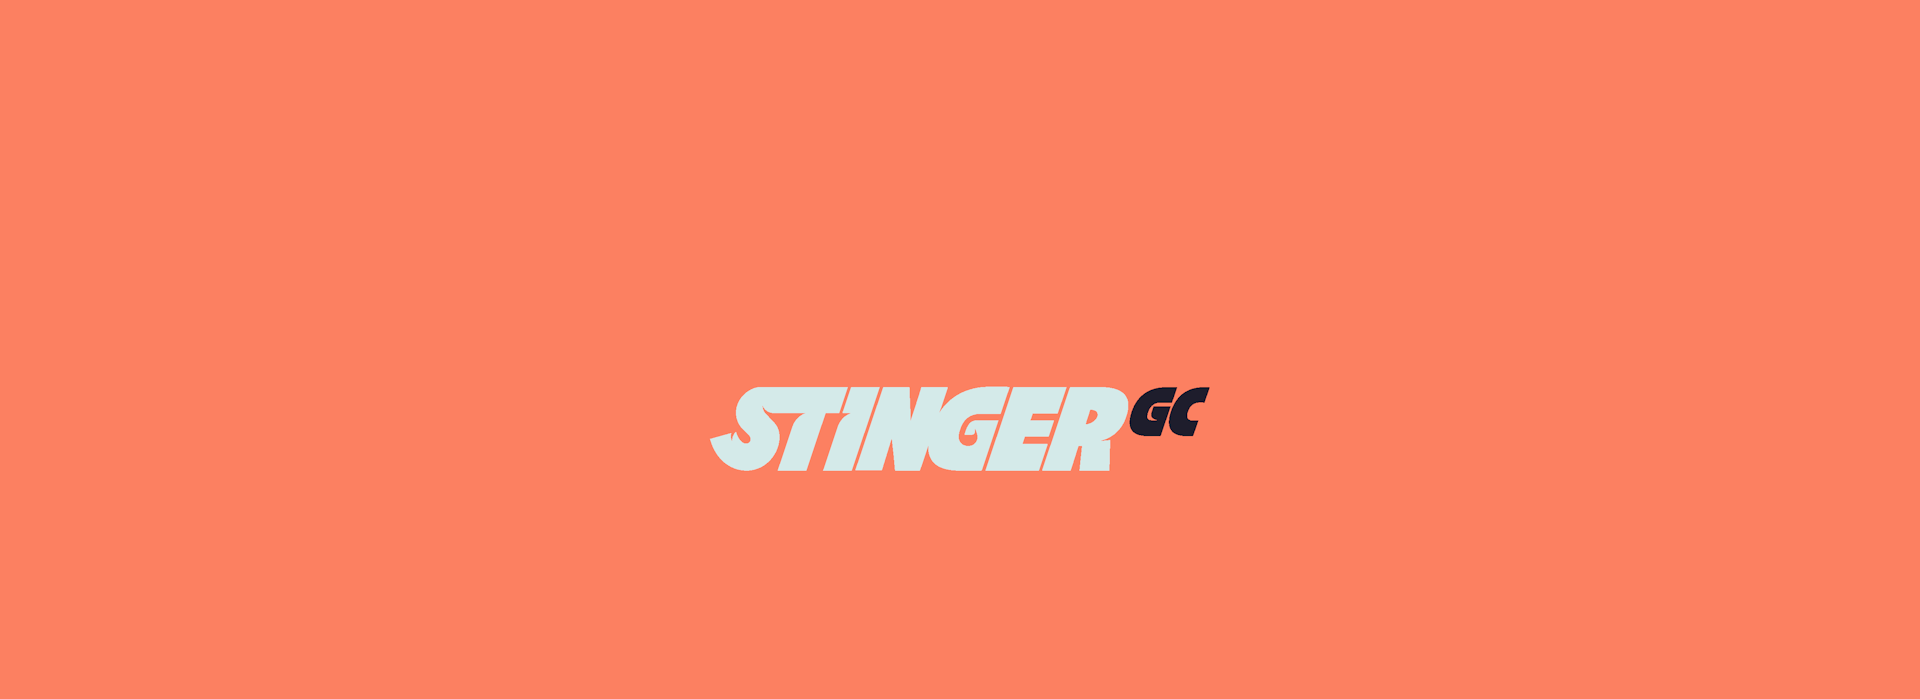 Stinger-GC Wordmark